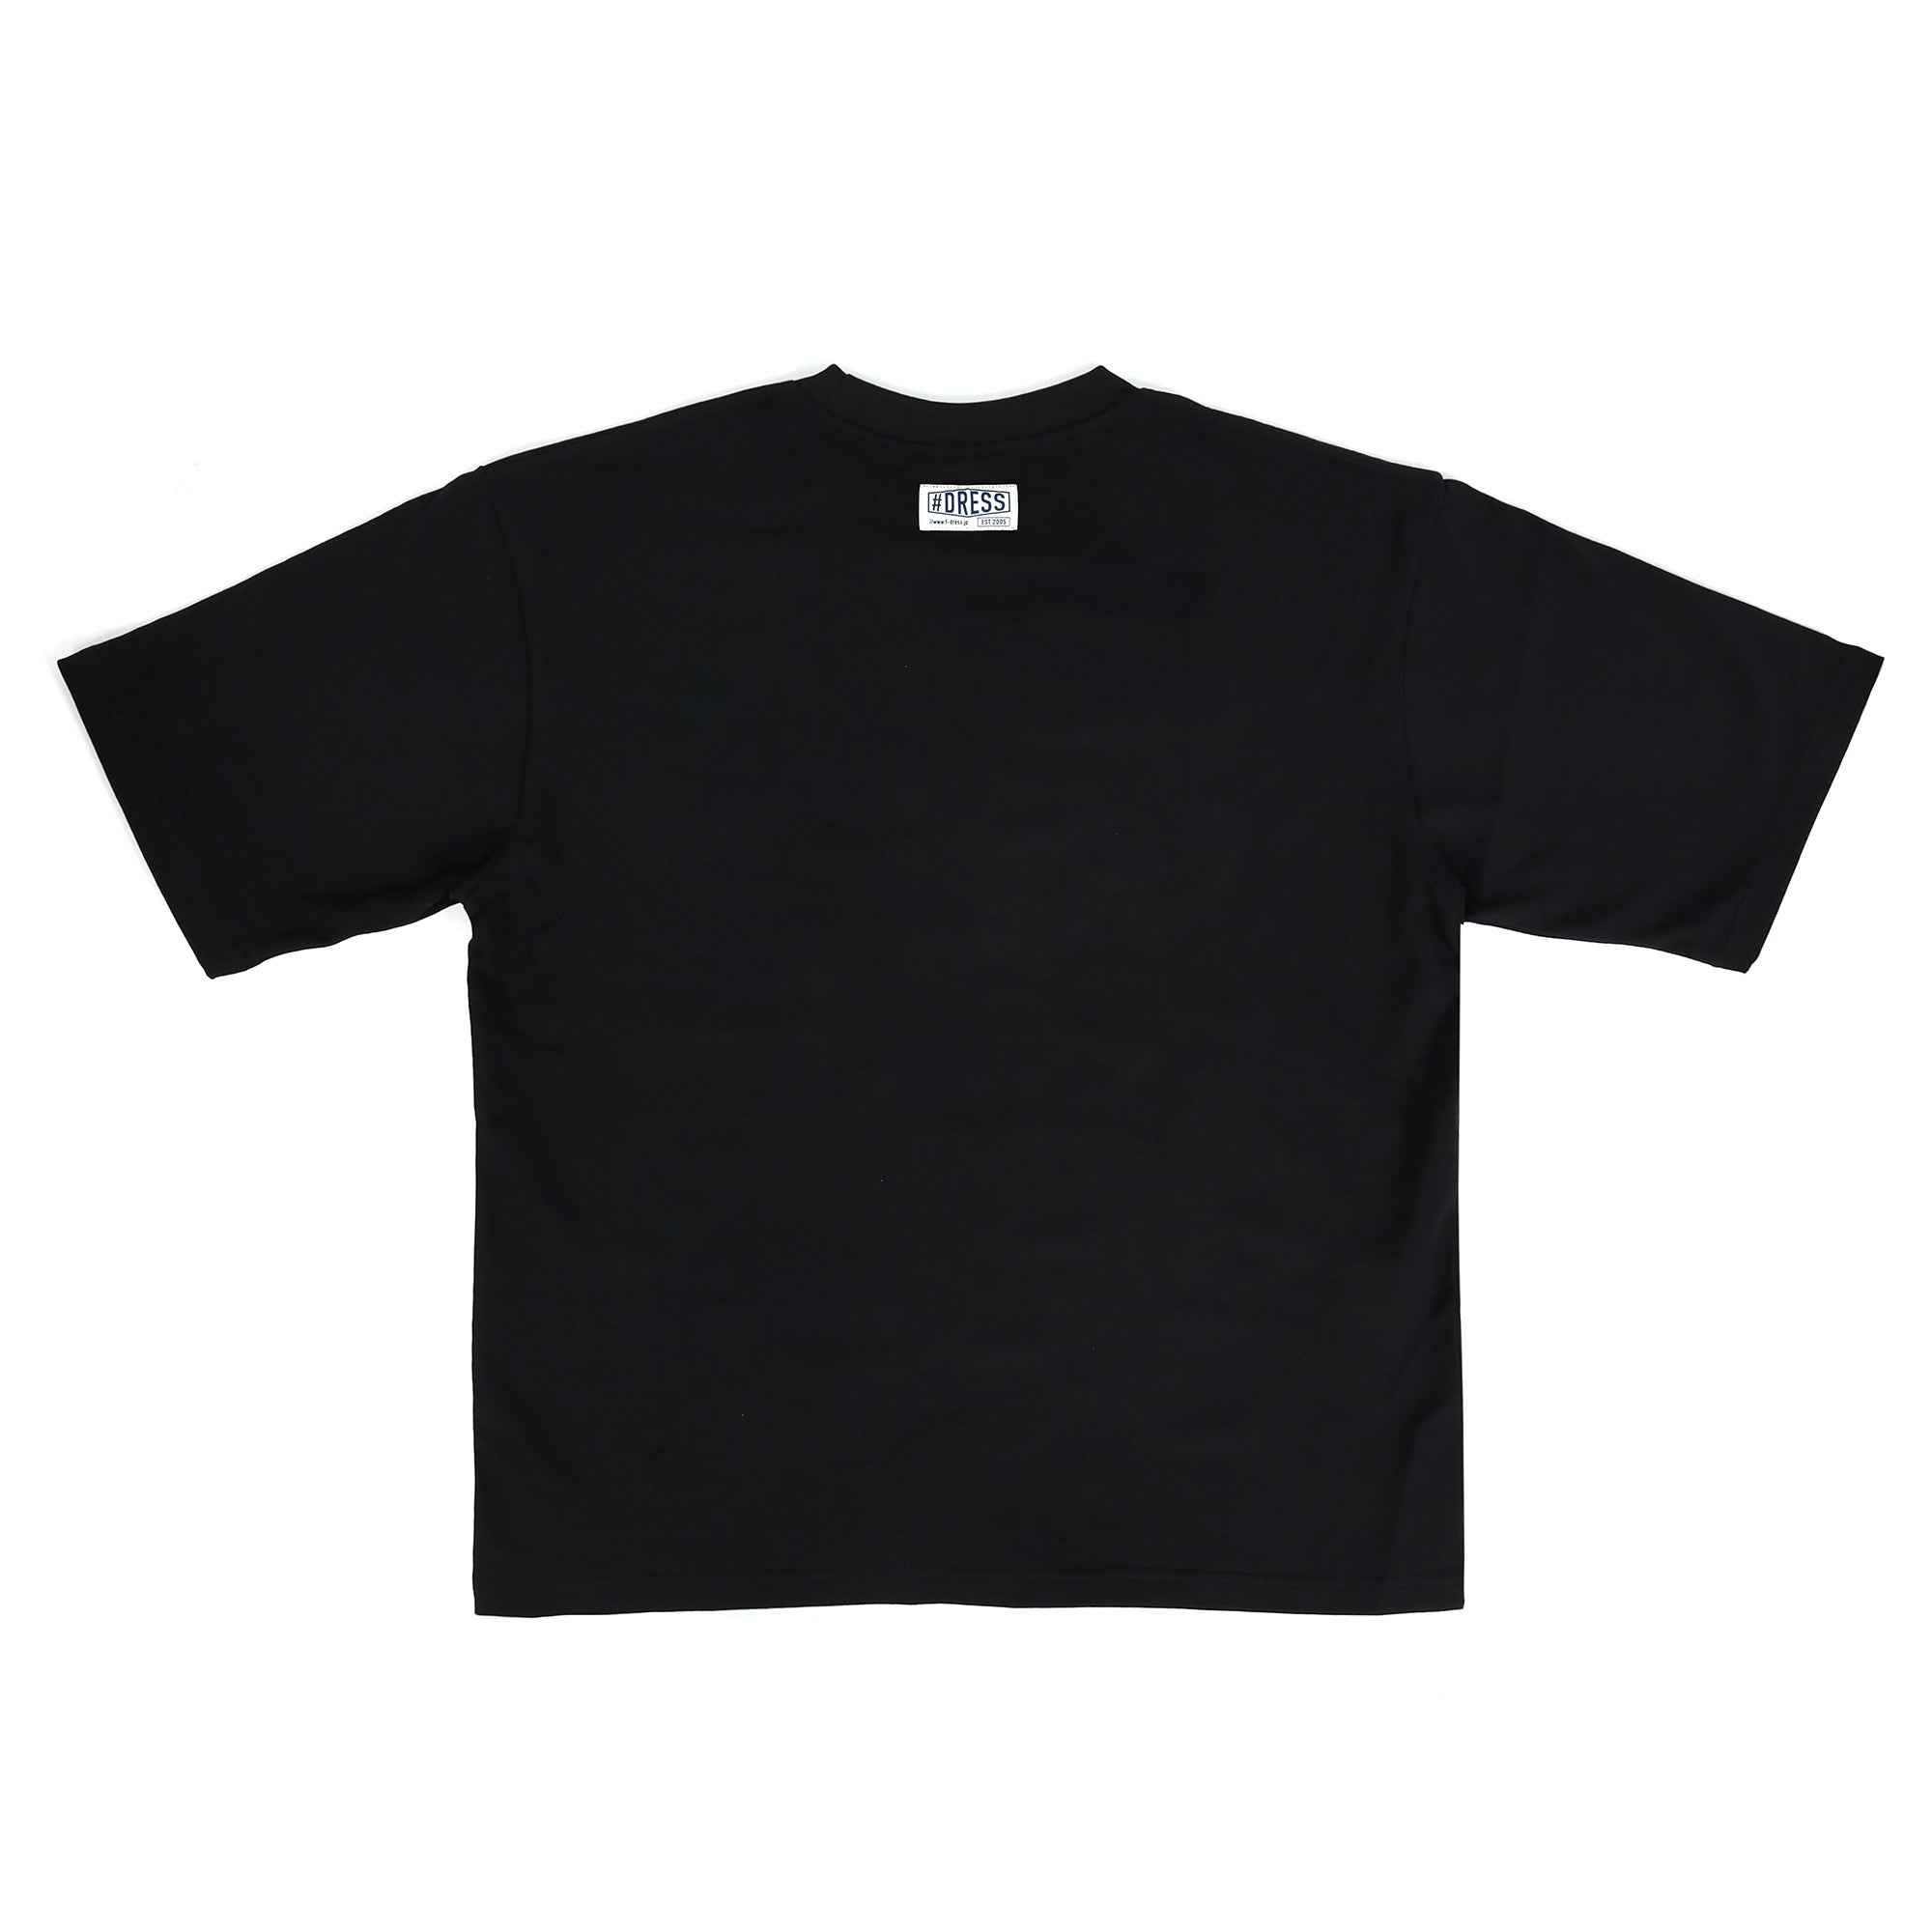 DRESS オーバーサイズ Tシャツ【ブラック】【4月発売予定！予約受付中！】